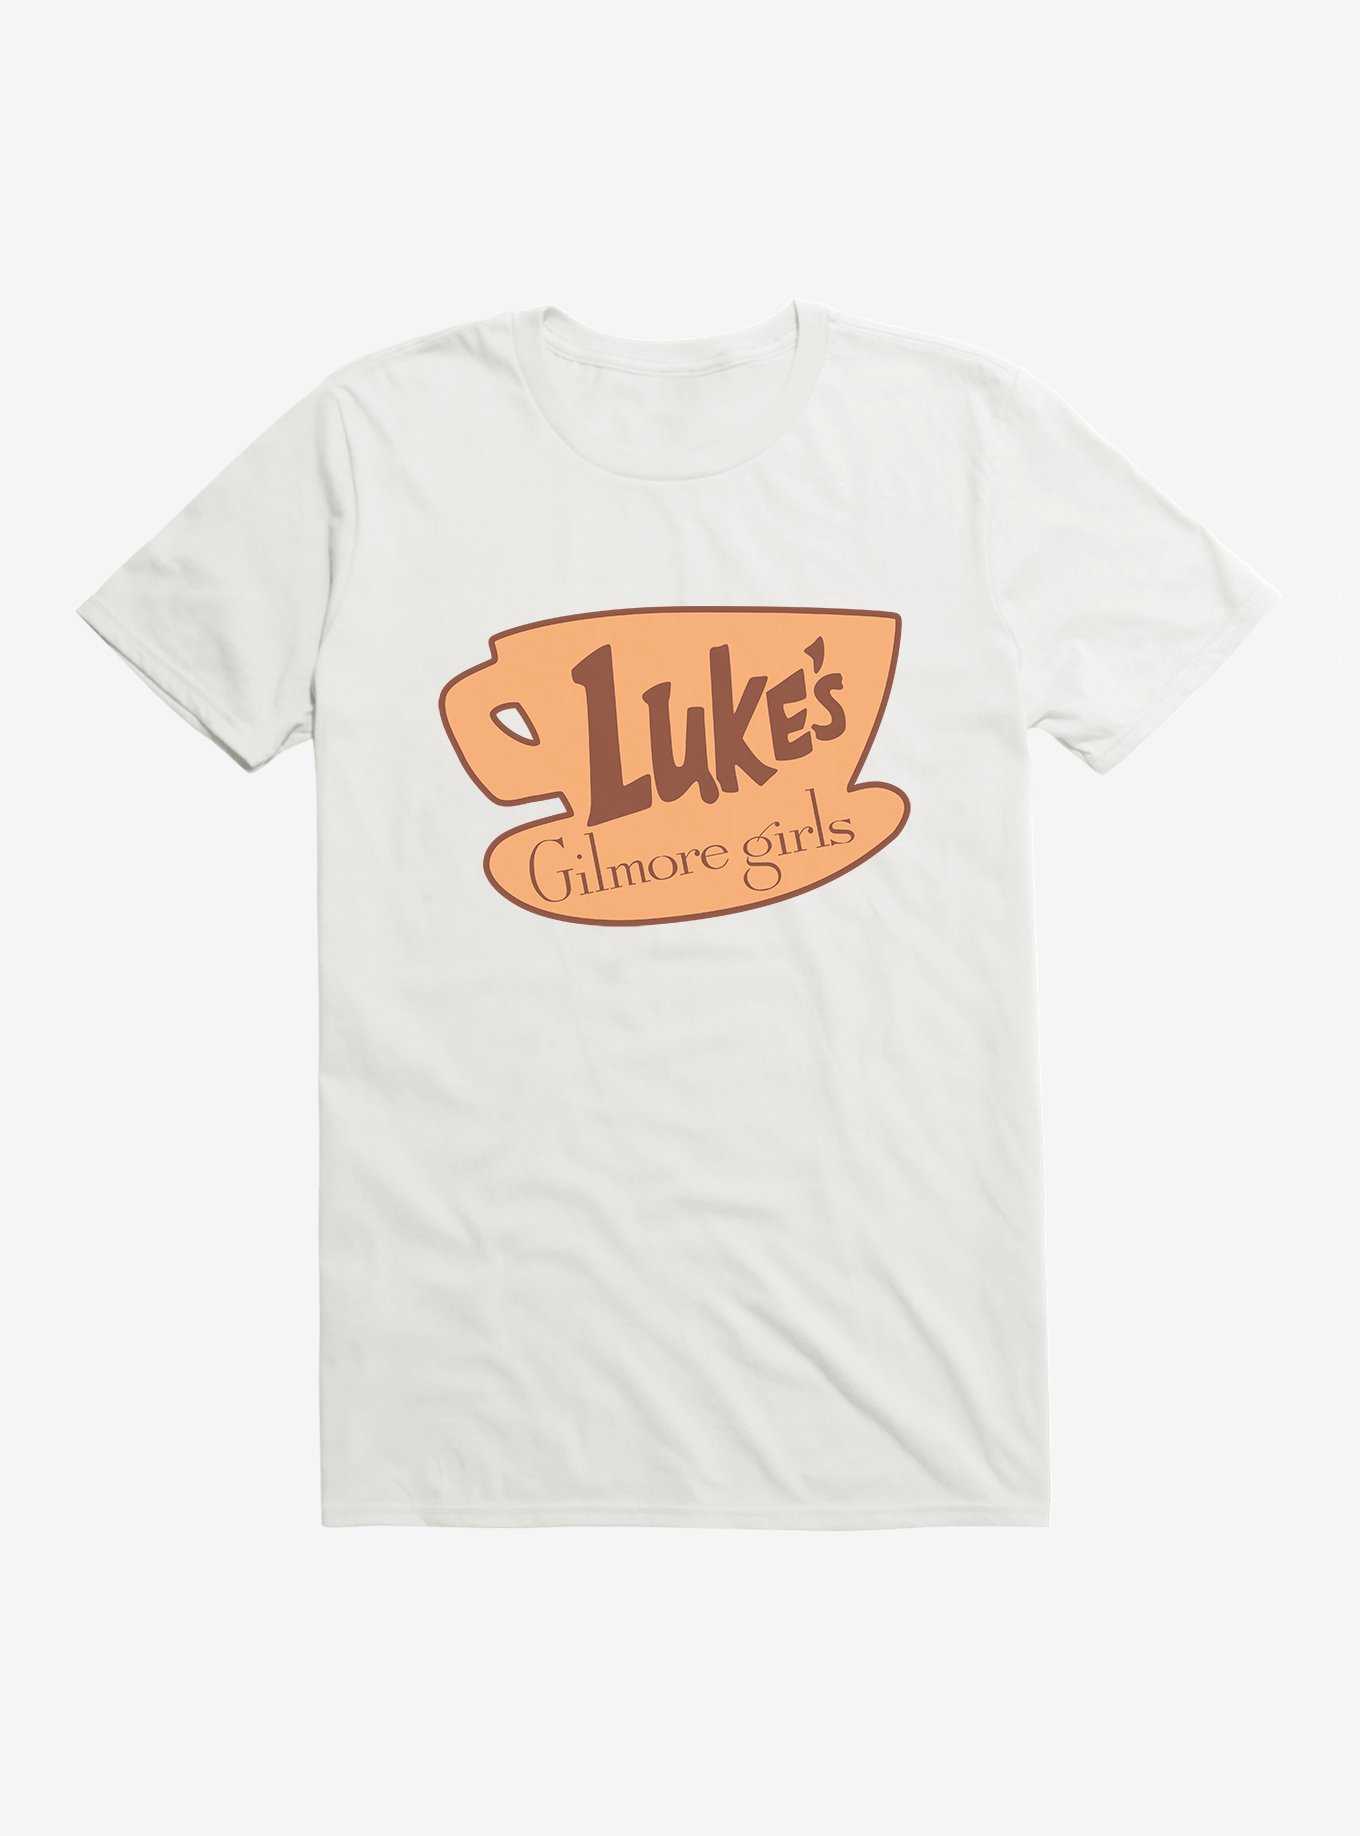 Gilmore Girls Luke's Diner T-Shirt, , hi-res